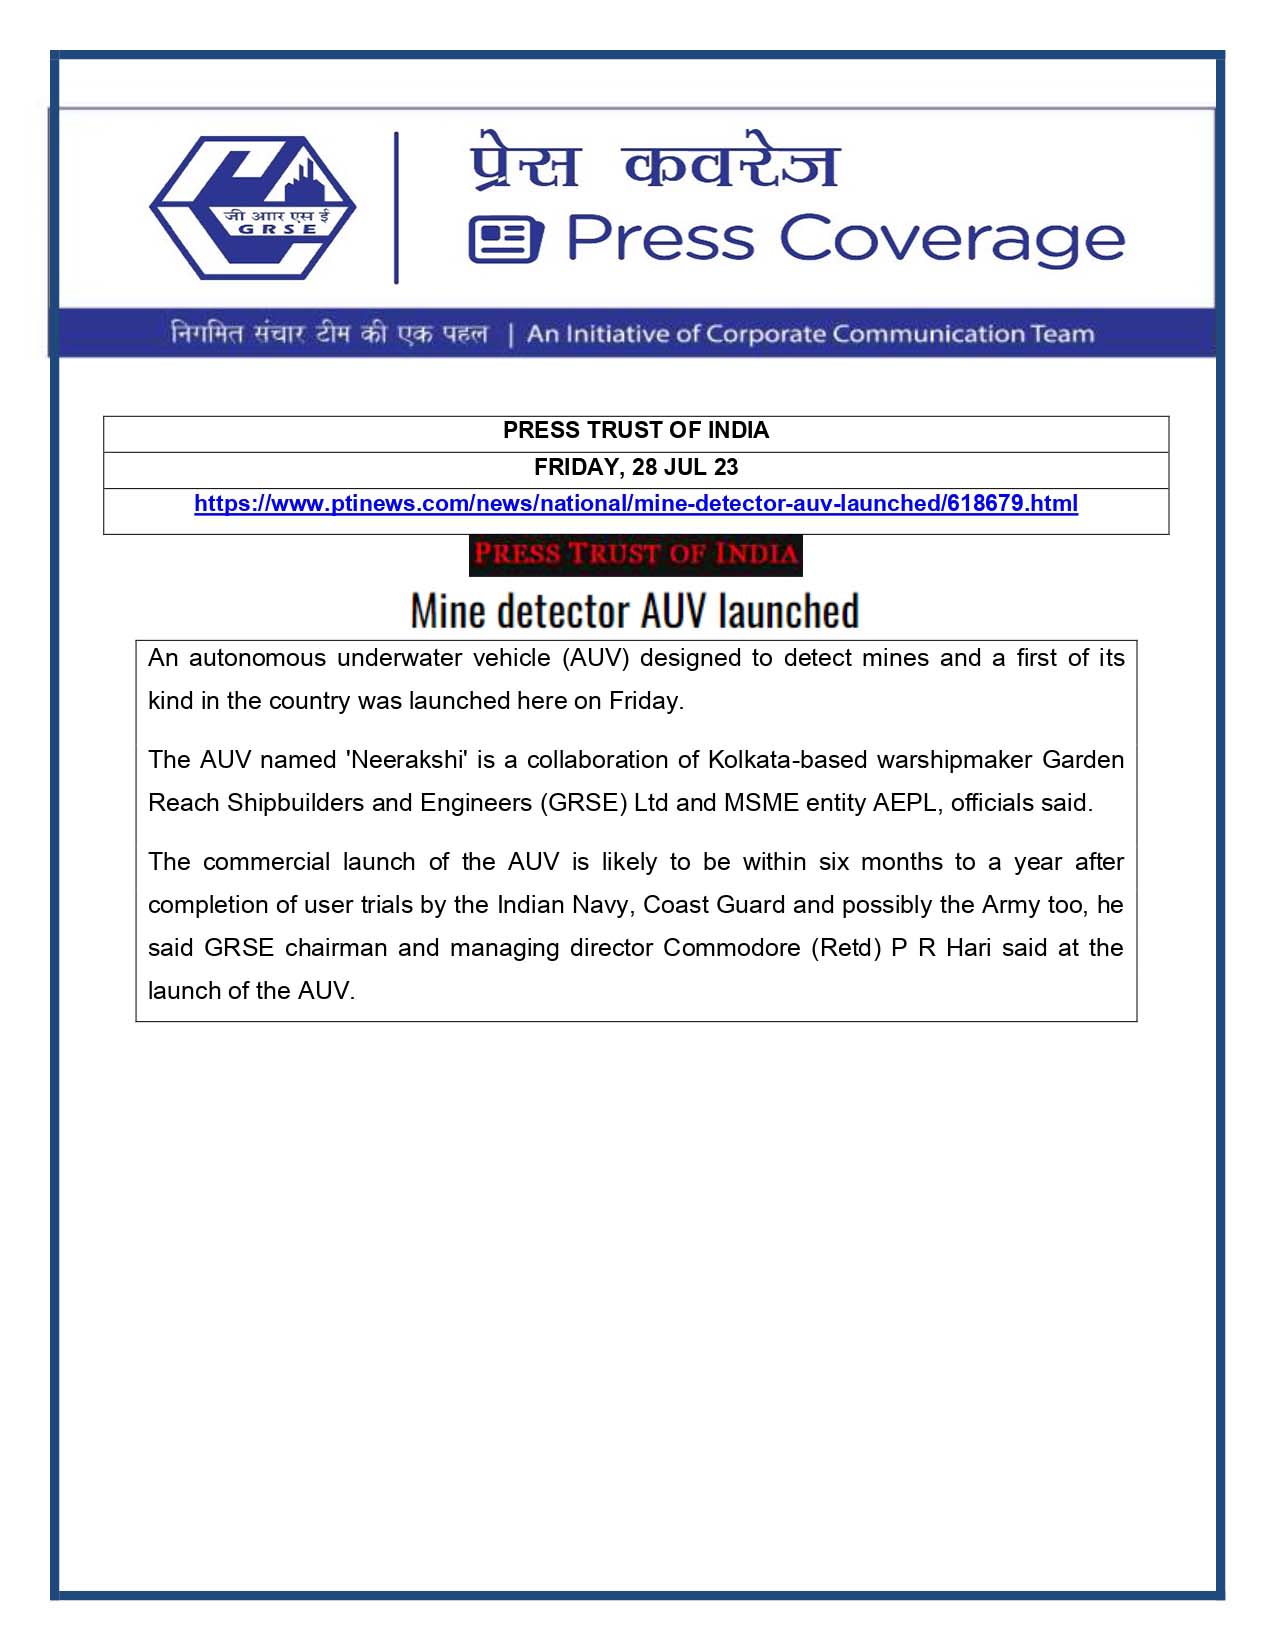 Press Coverage : Press Trust of India, 28 Jul 23 : Mine Detector AUV Launched